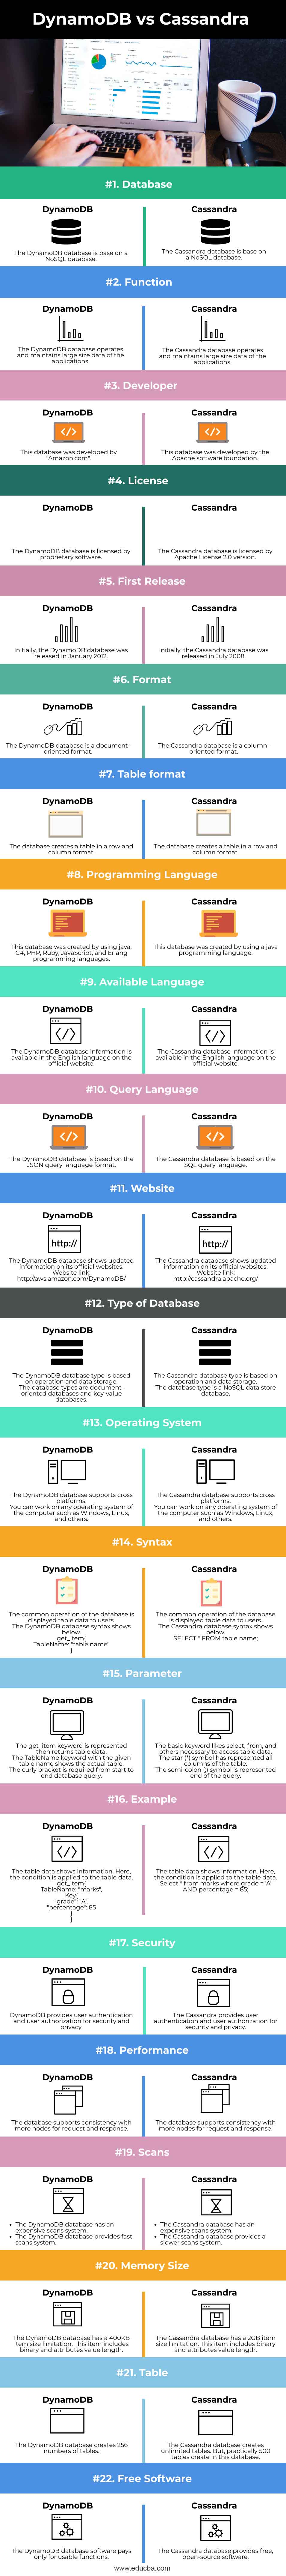 DynamoDB-vs-Cassandra-info